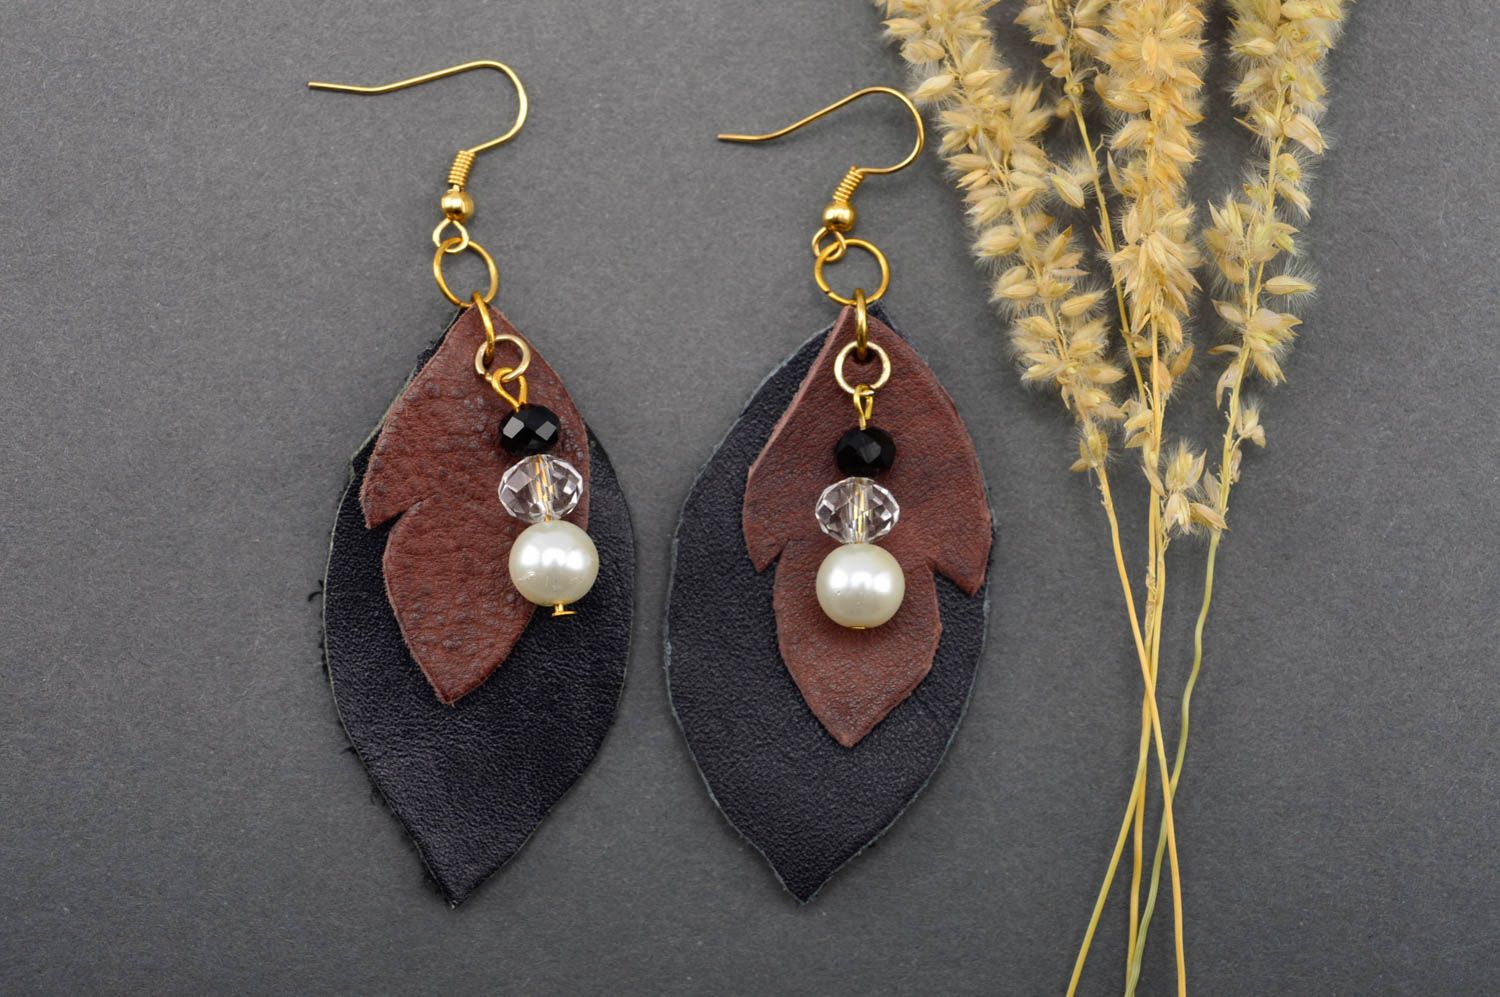 Handmade leather earrings designer accessories leather jewelry long earrings photo 1